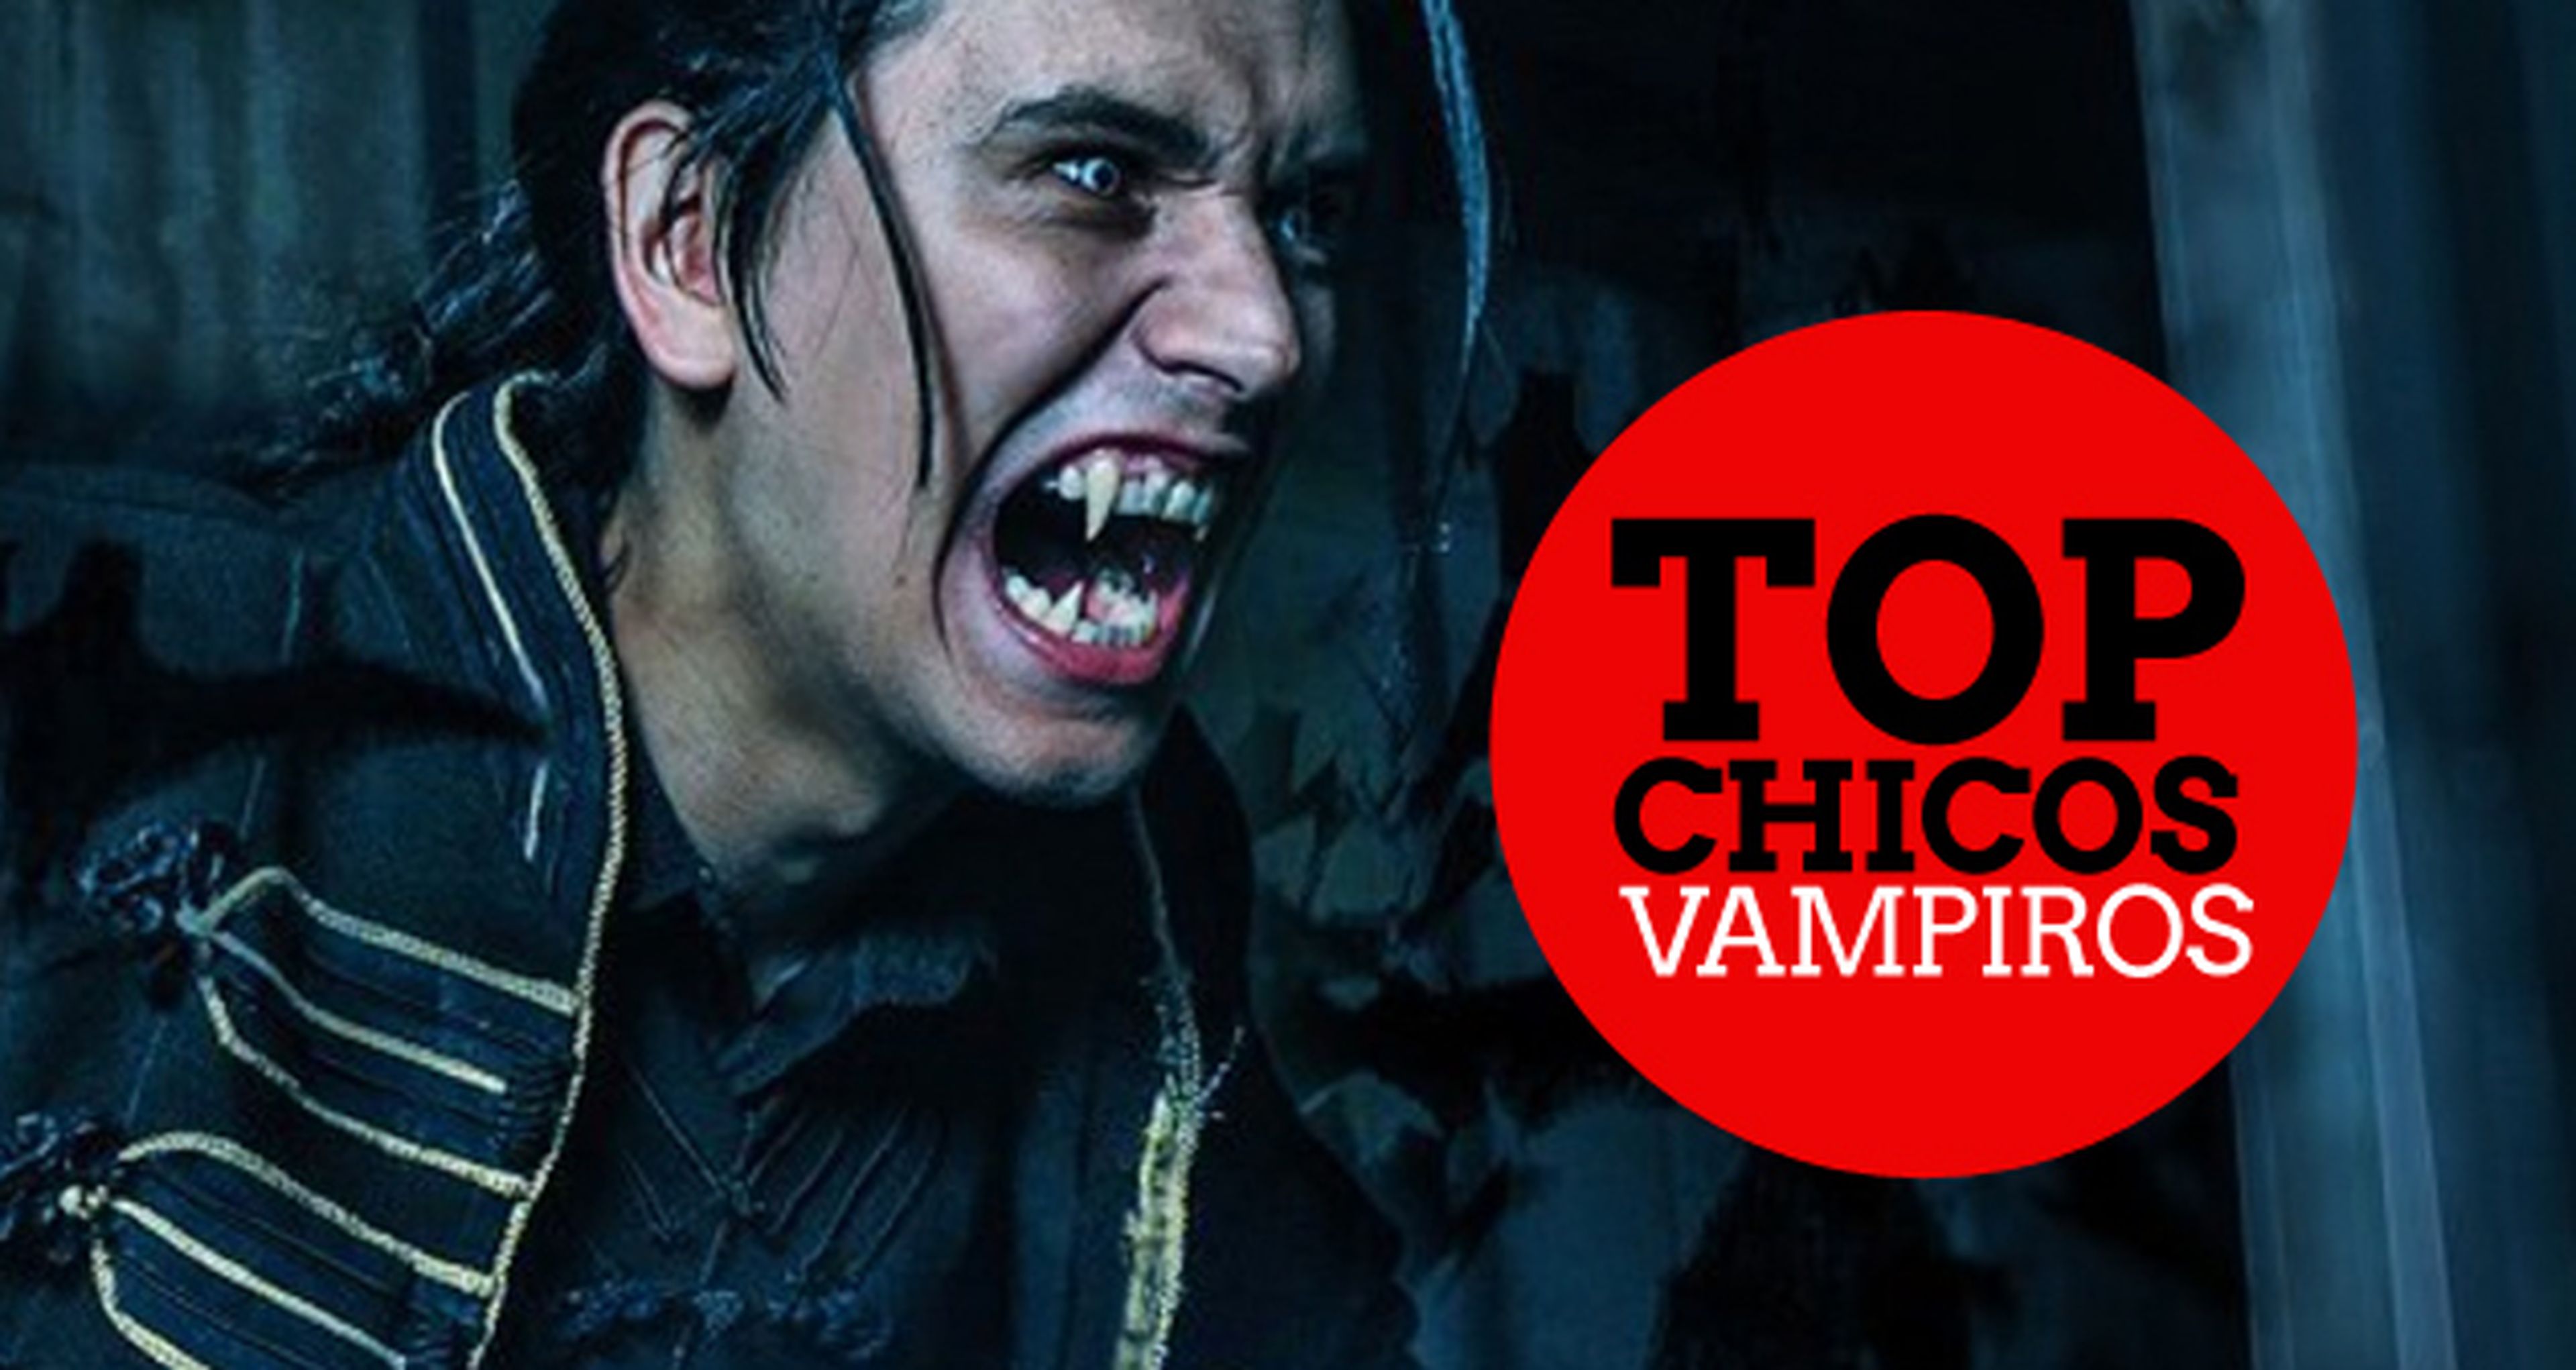 Top chicos: Vampiros